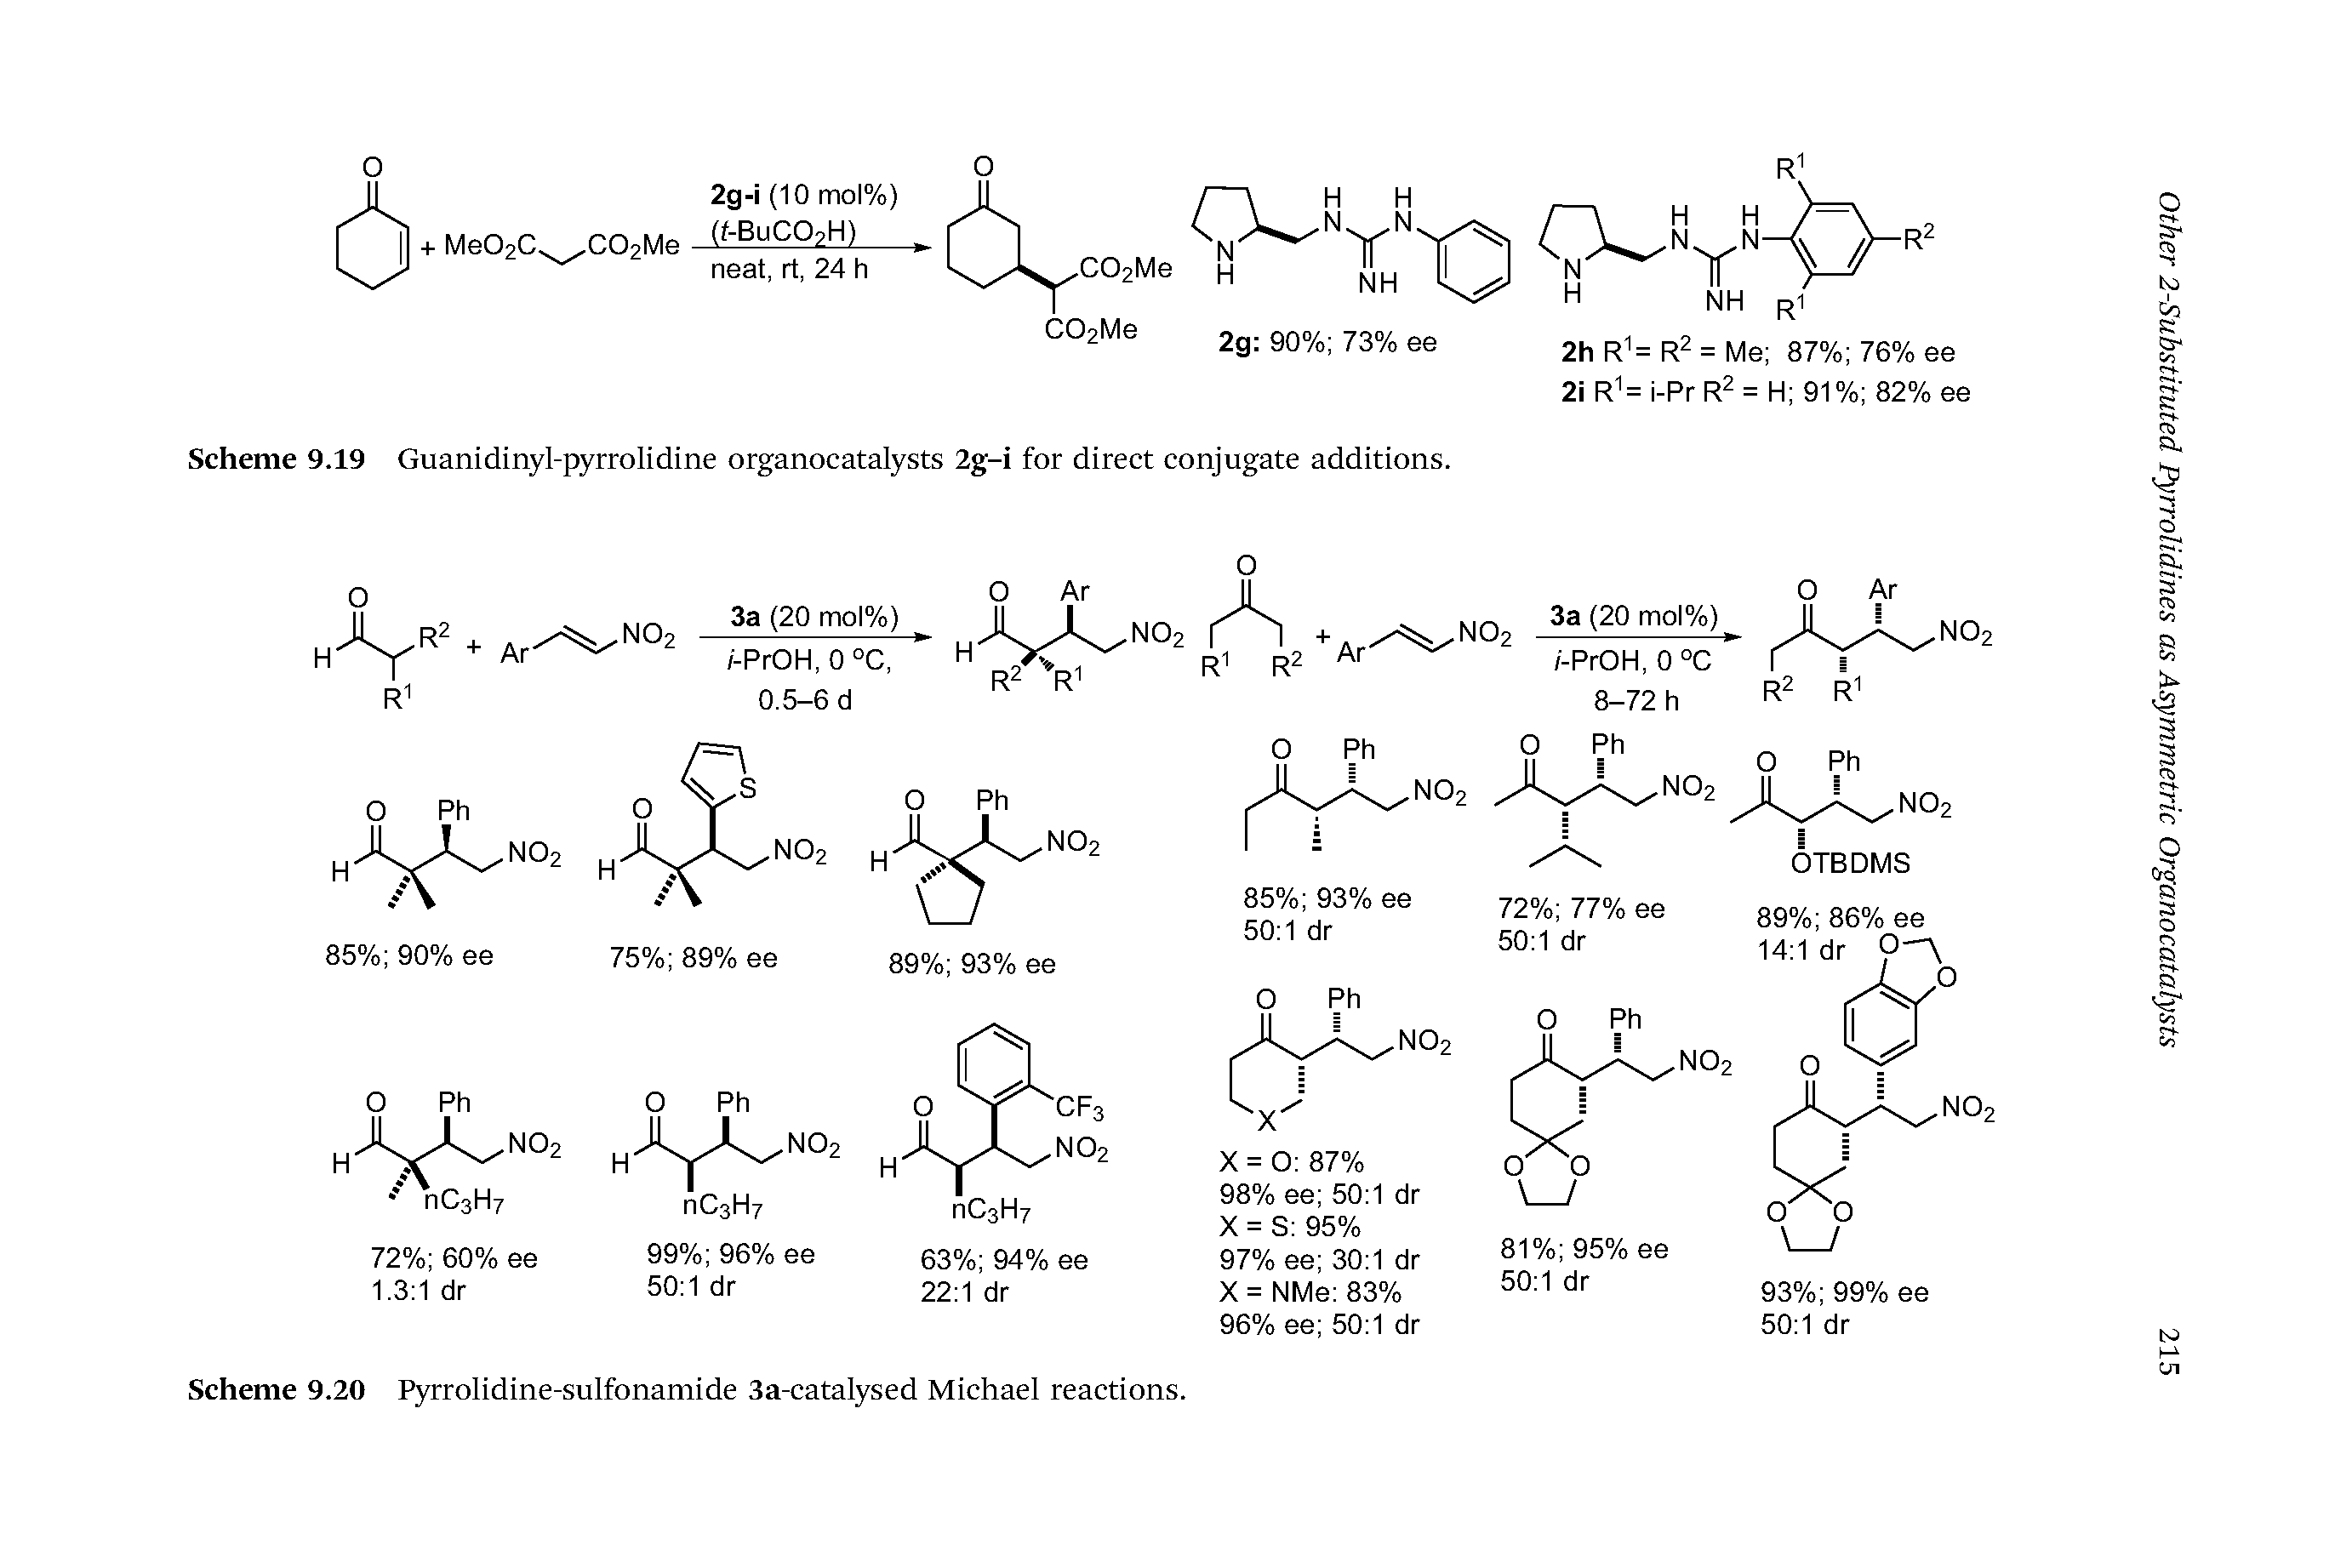 Scheme 9.20 Pyrrolidine-sulfonamide 3a-catalysed Michael reactions.